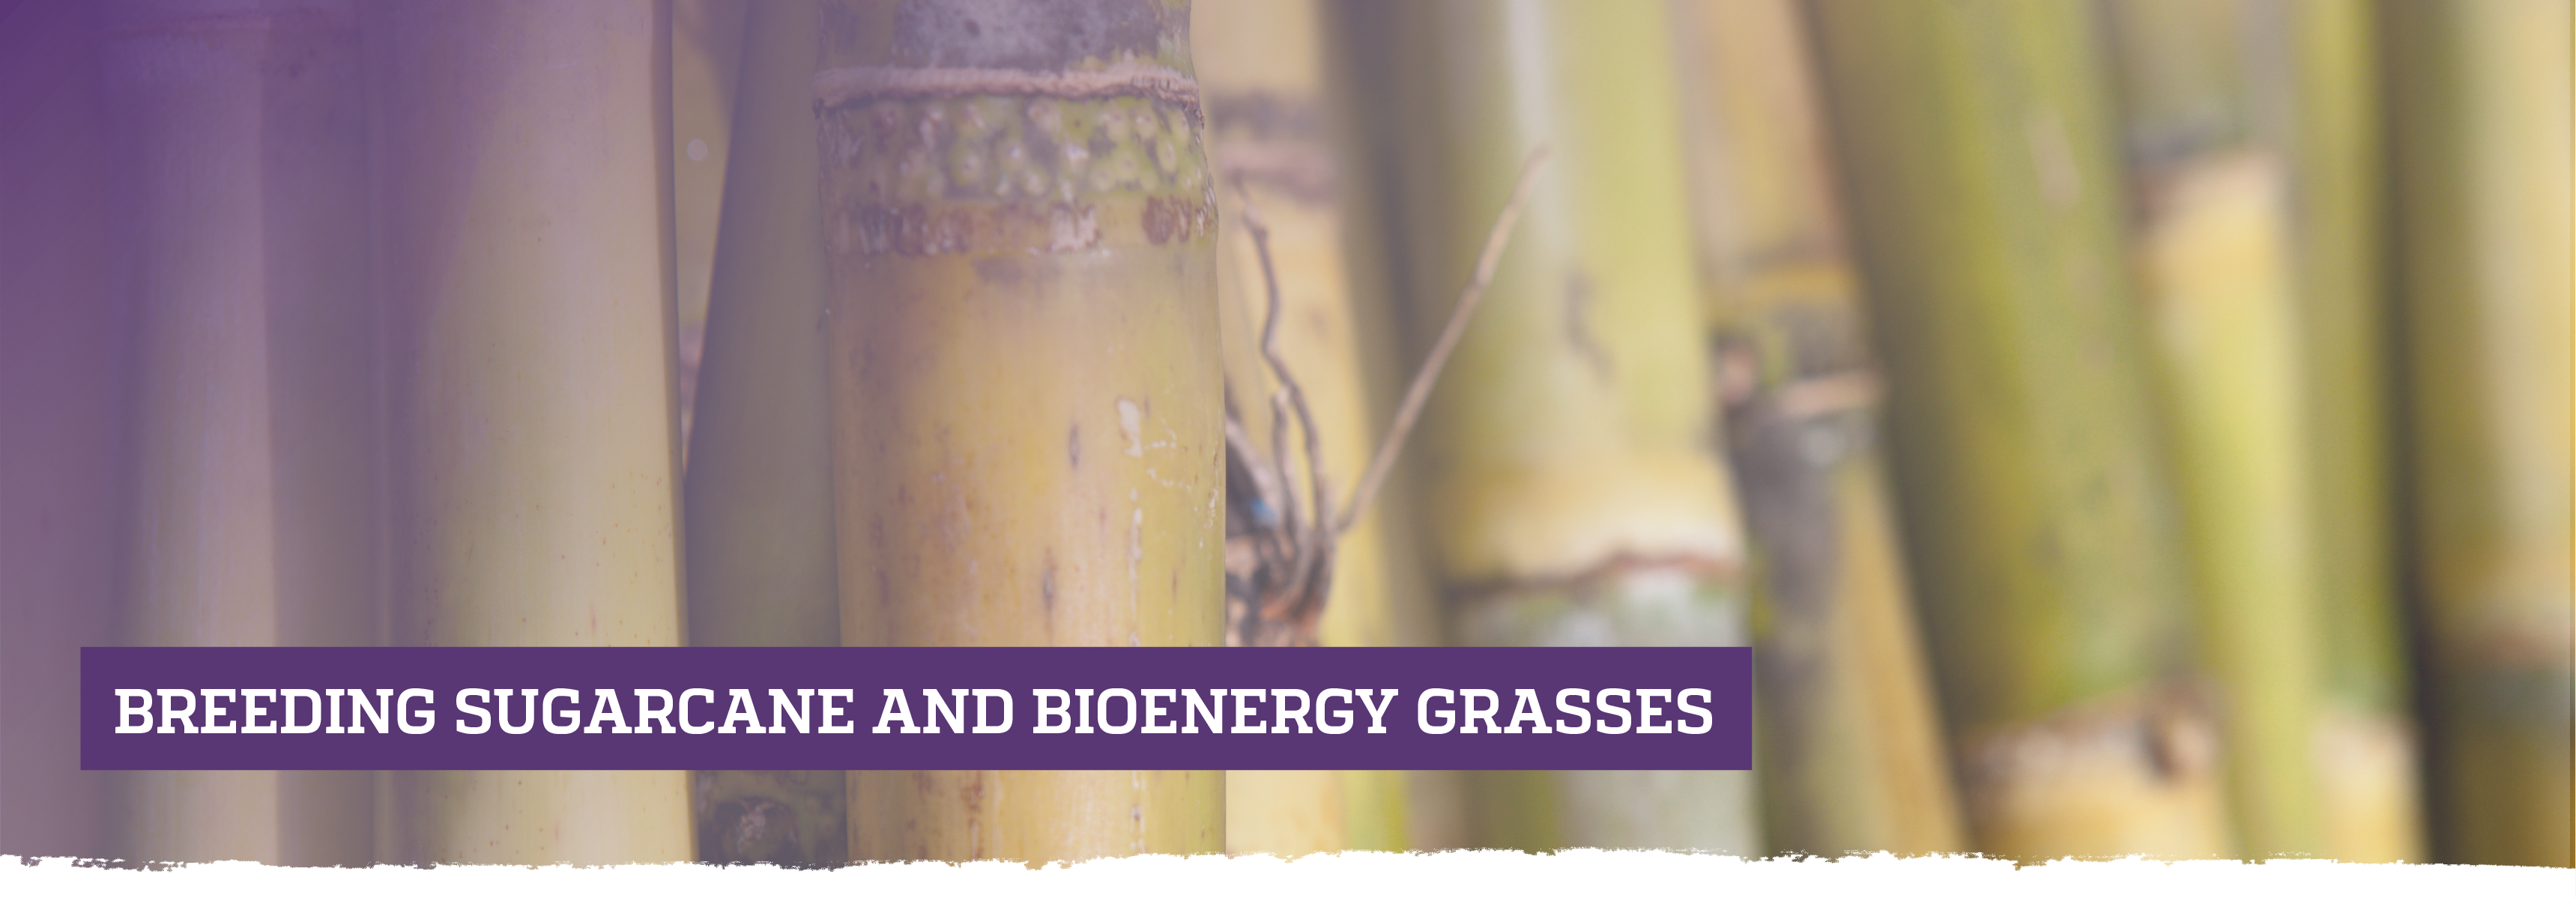 Breeding sugarcane and bioenergy grasses